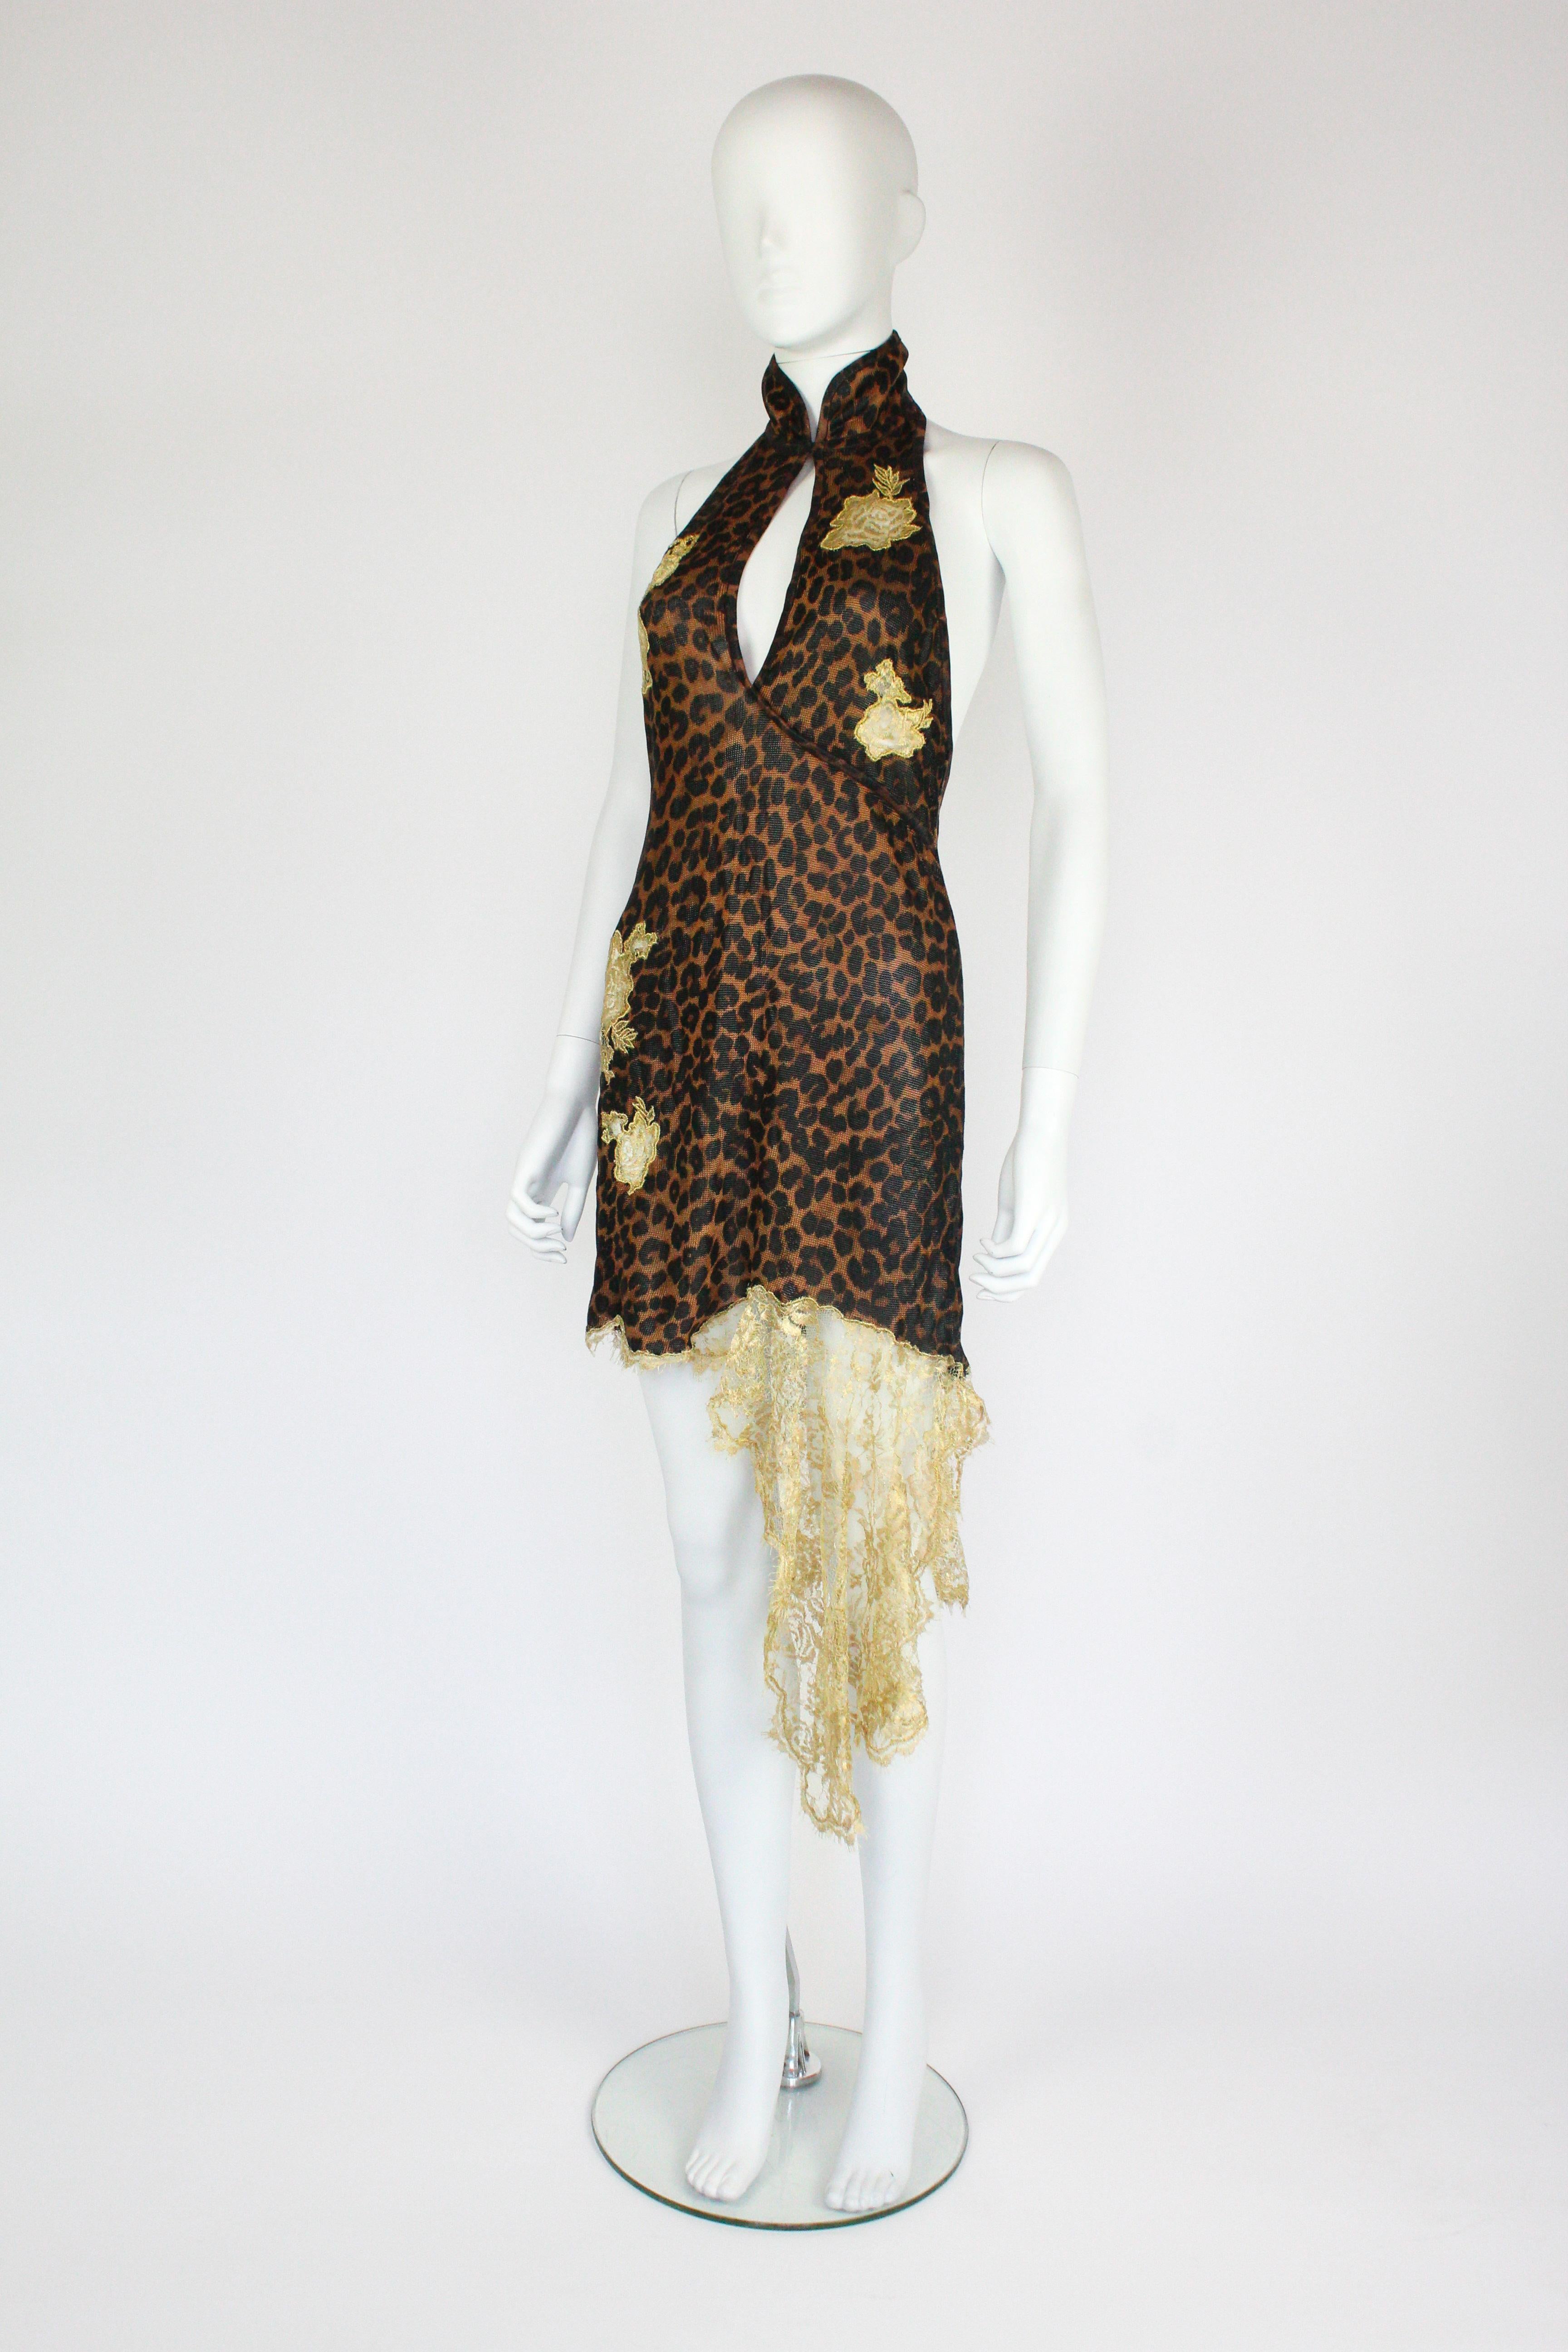 Christian Dior by John Galliano Leopard Dress F/W 2000 For Sale 3